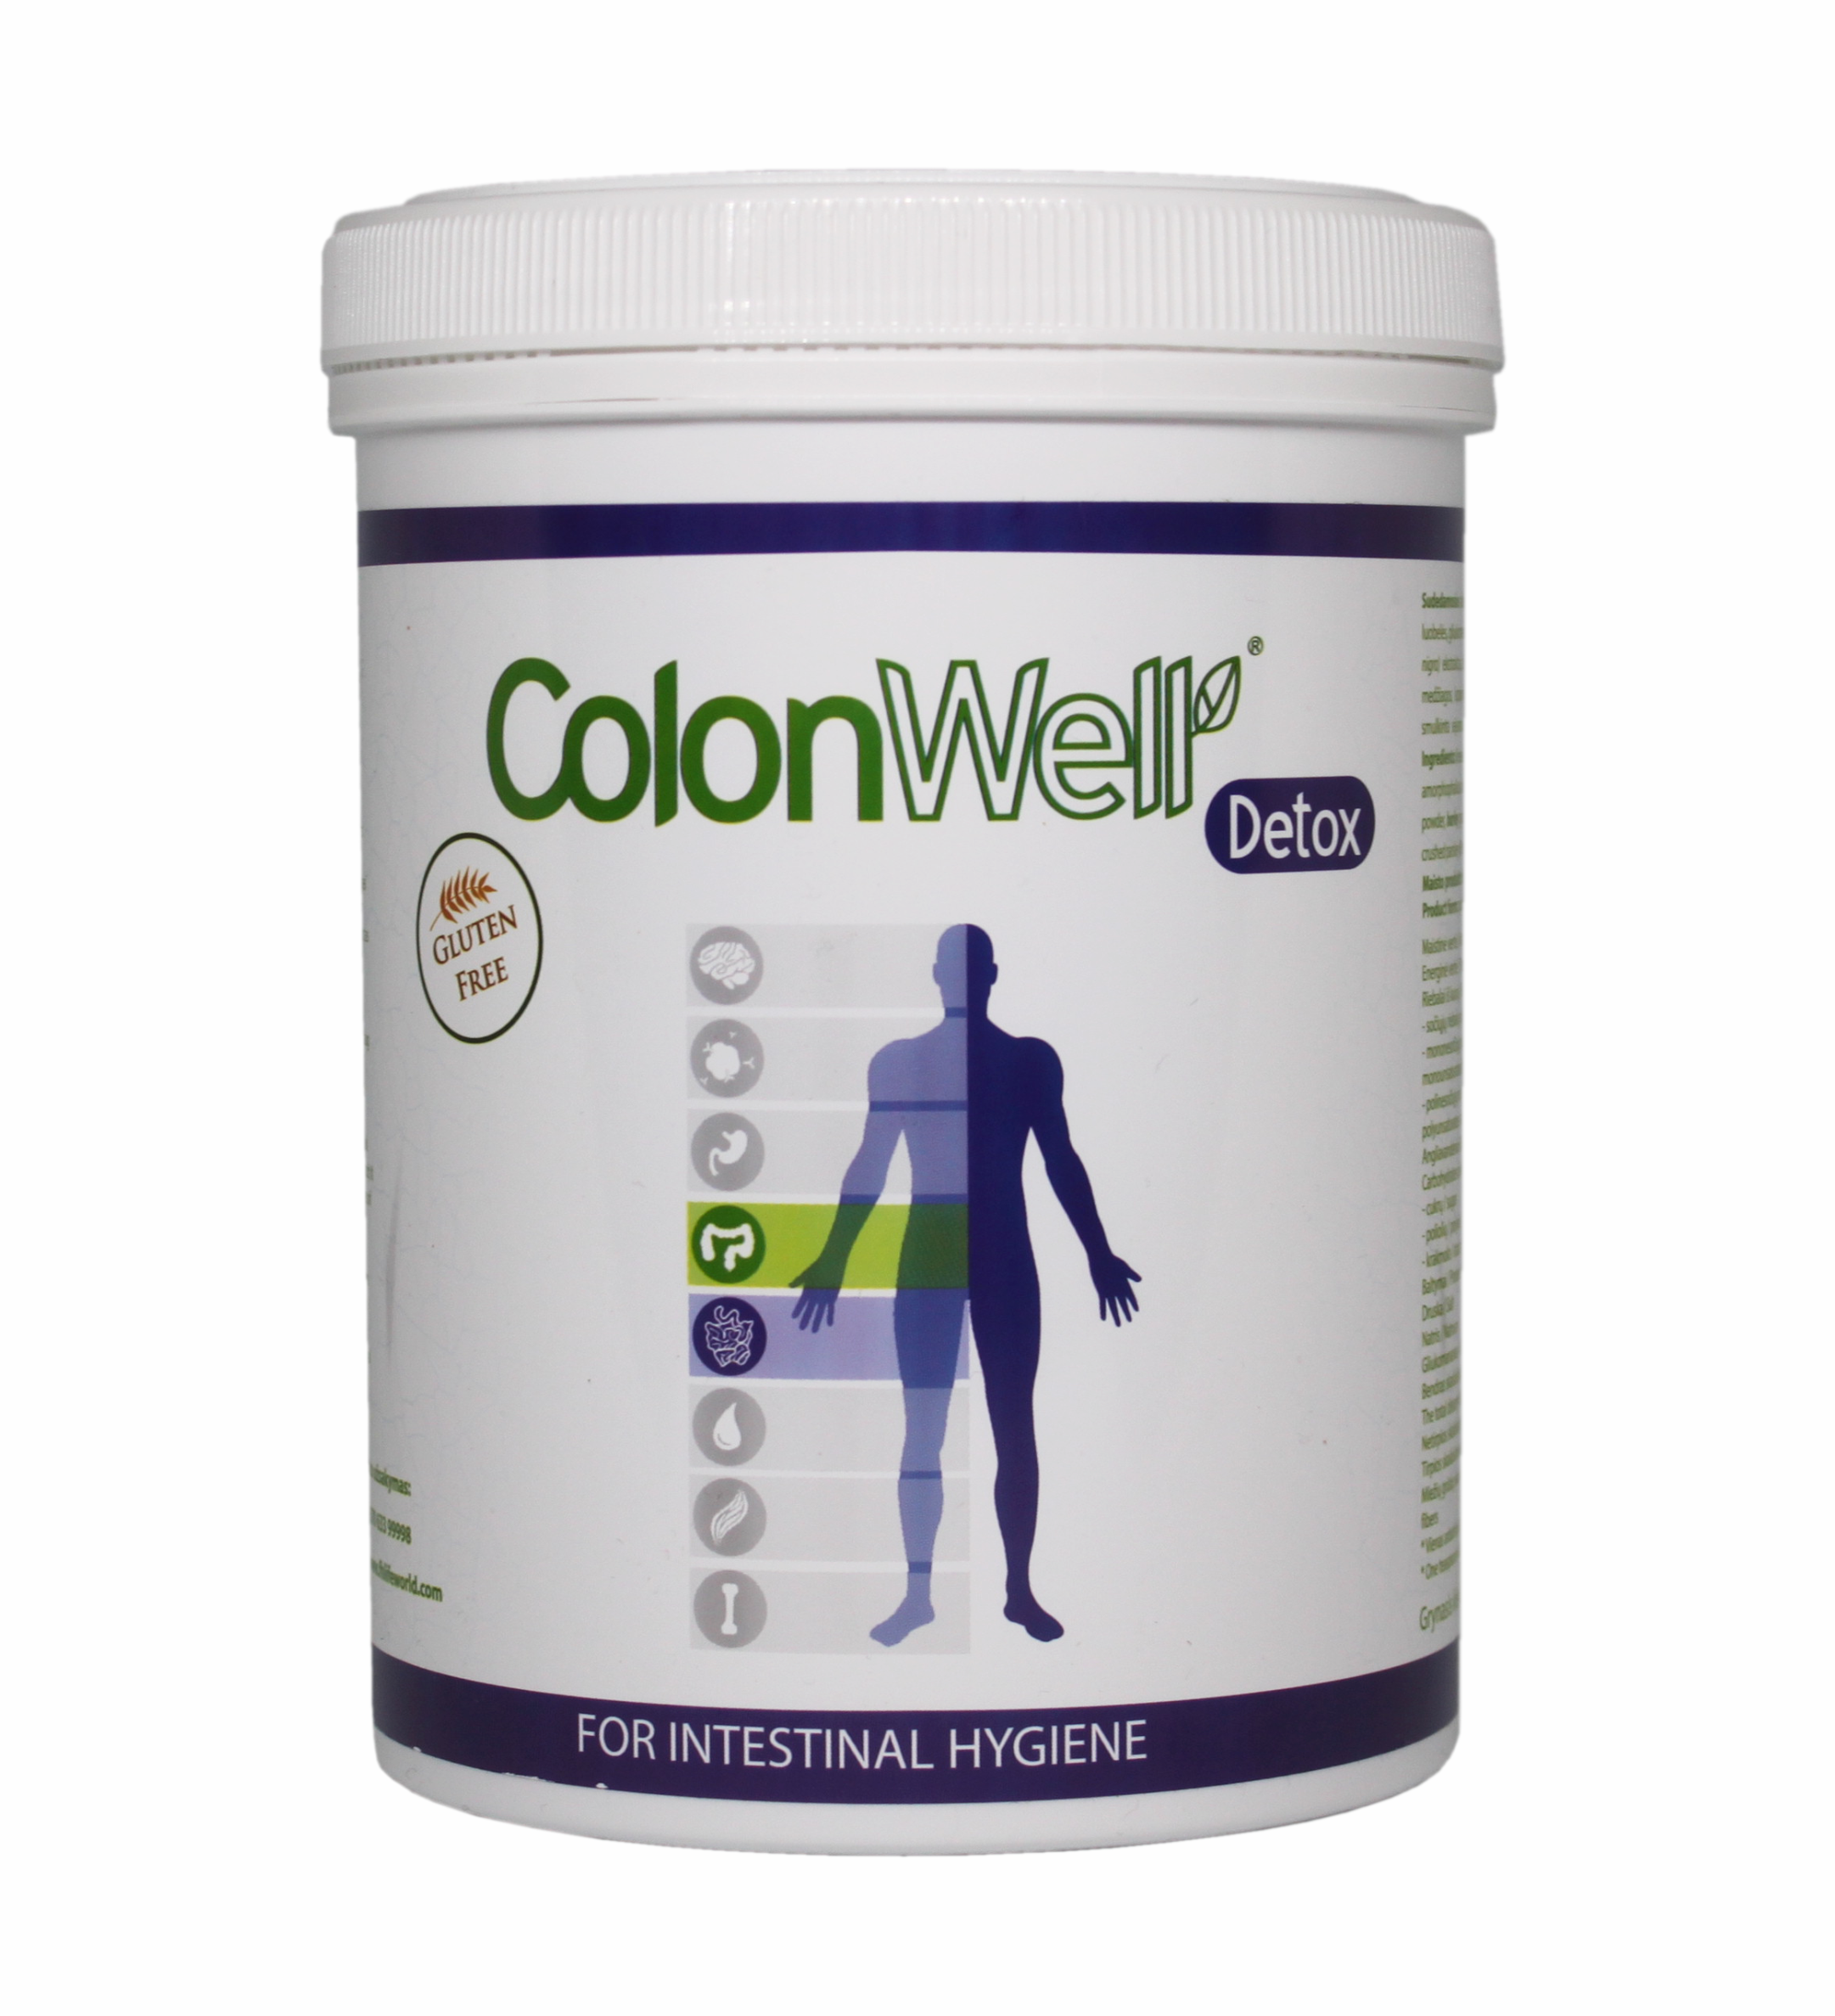 Colonwell.lt produktas - ColonWell Detox - žolelių ir sėklų mišinys su juodojo riešuto ekstraktu 400g. (Antiparazitant complex)